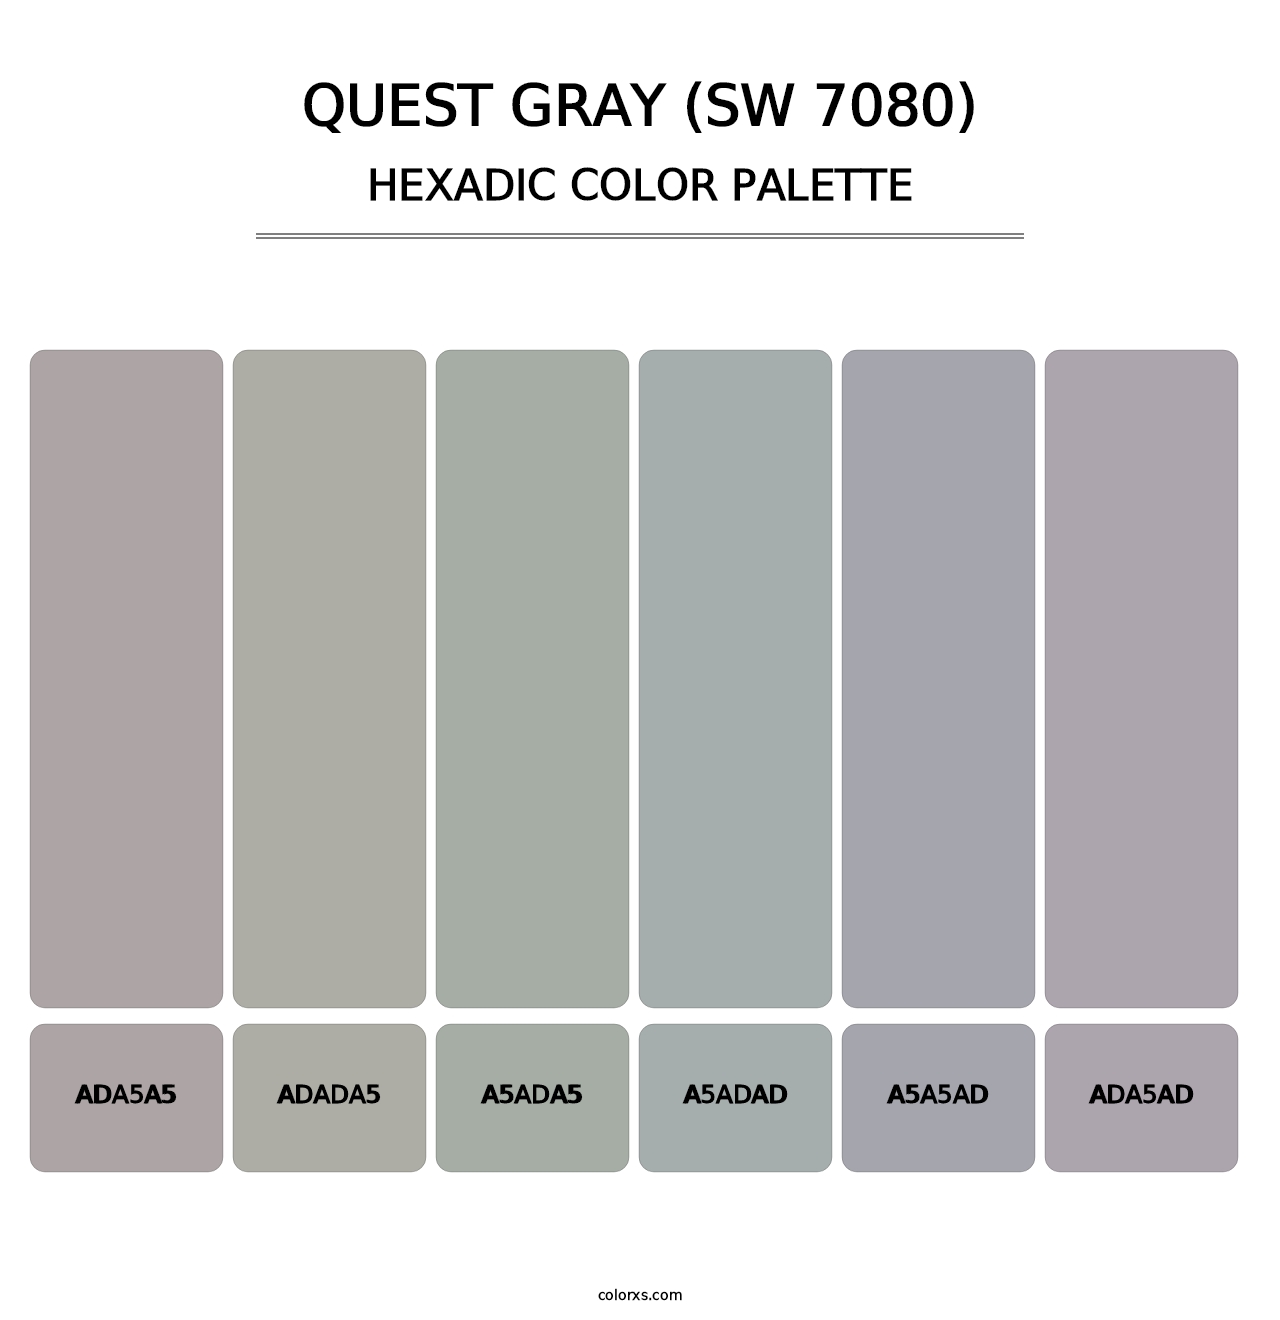 Quest Gray (SW 7080) - Hexadic Color Palette